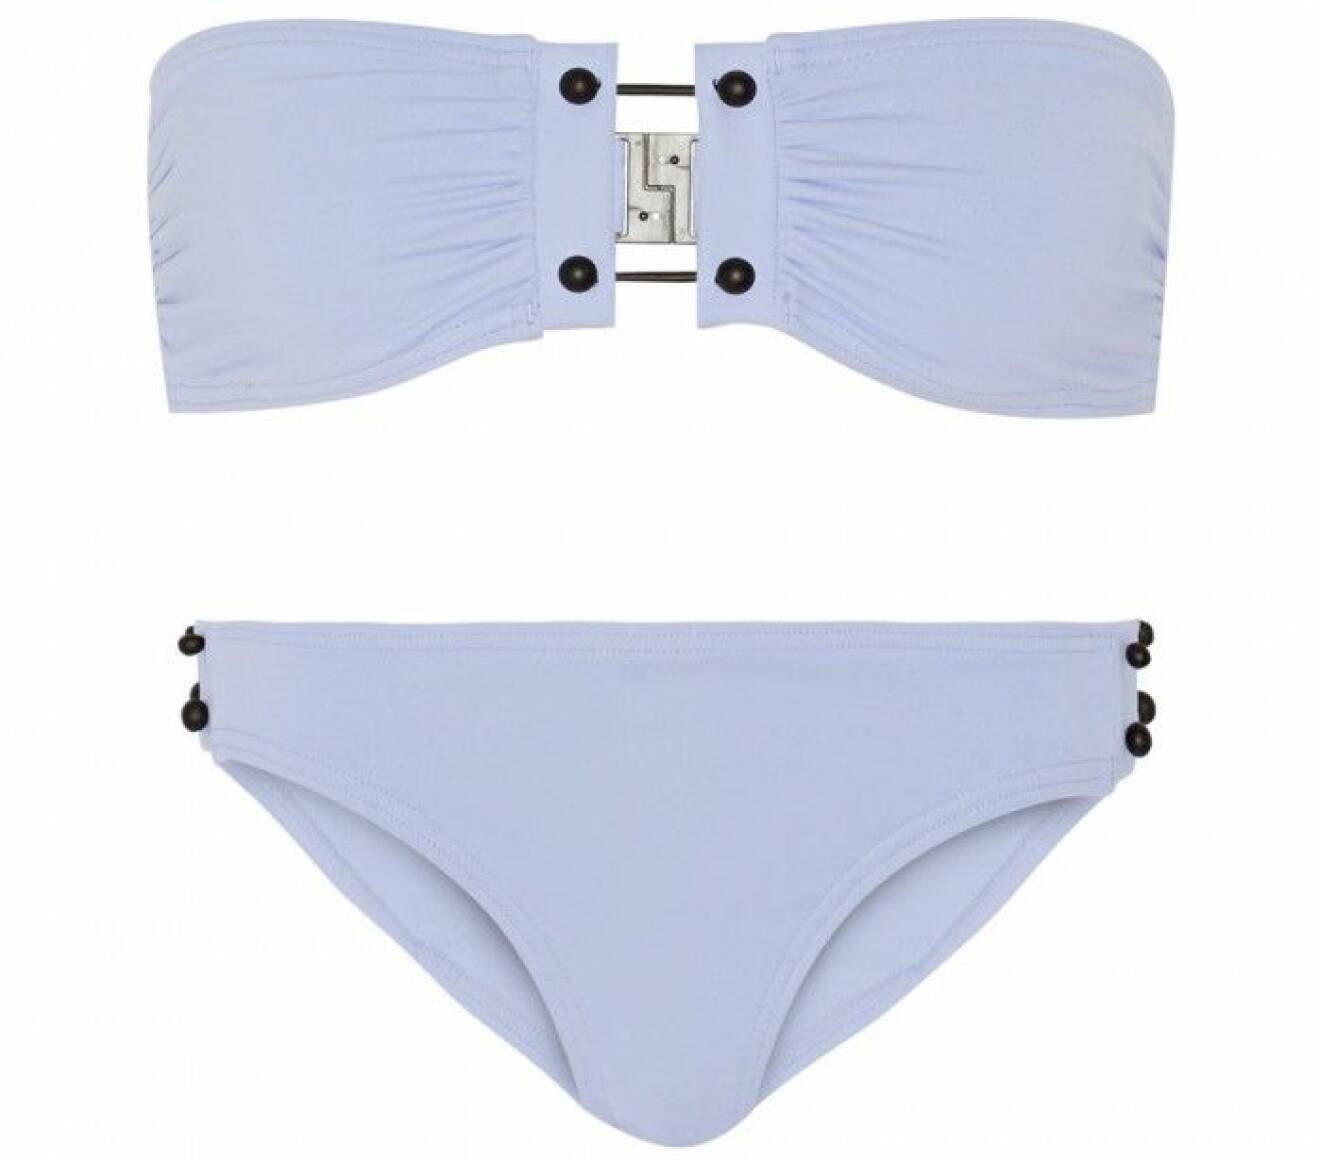 7. Bikini, 2948 kr, Proenza Schouler Net-a-porter.com